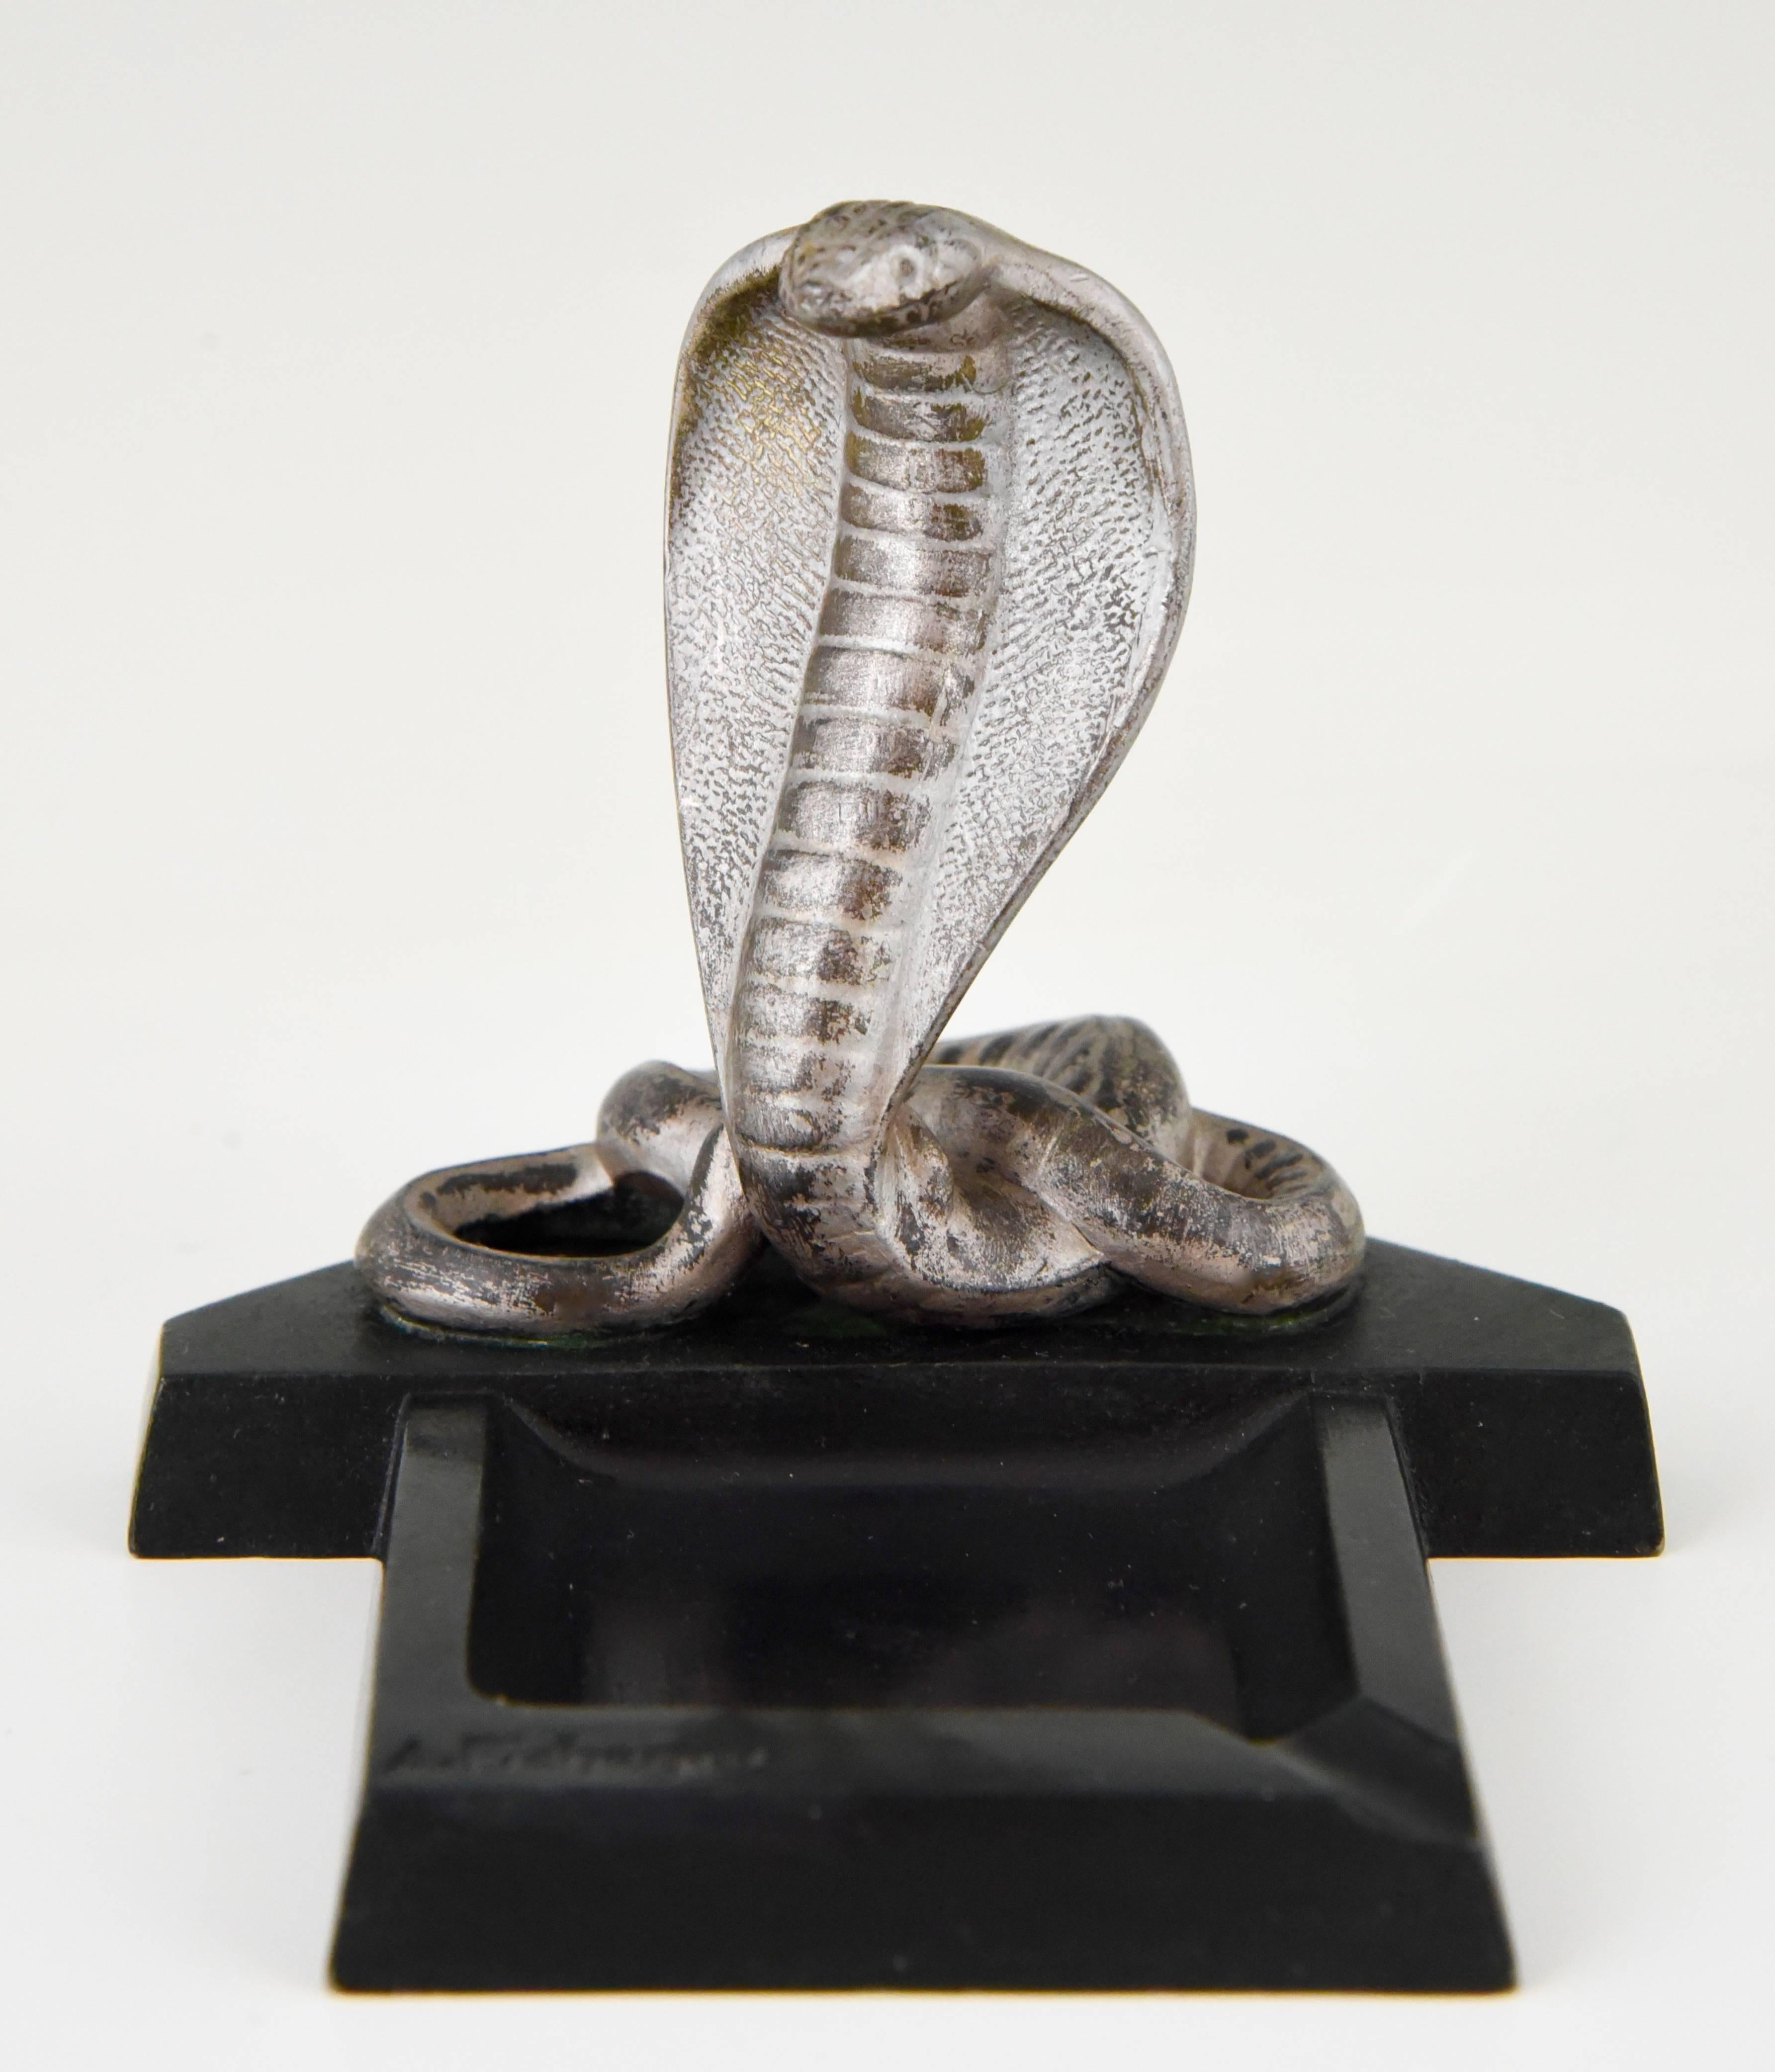 French Art Deco cobra snake ashtray.

Artist/ maker: Pichegru.
Signature/ marks: Pichegru
Style: Art Deco
Date: 1930
Material: Patinated art metal.
Origin: France
Size: H 9.3 cm x L 12 cm. x W 10 cm.
H. 3.7 inch x L. 4.7 inch. X W. 3.9